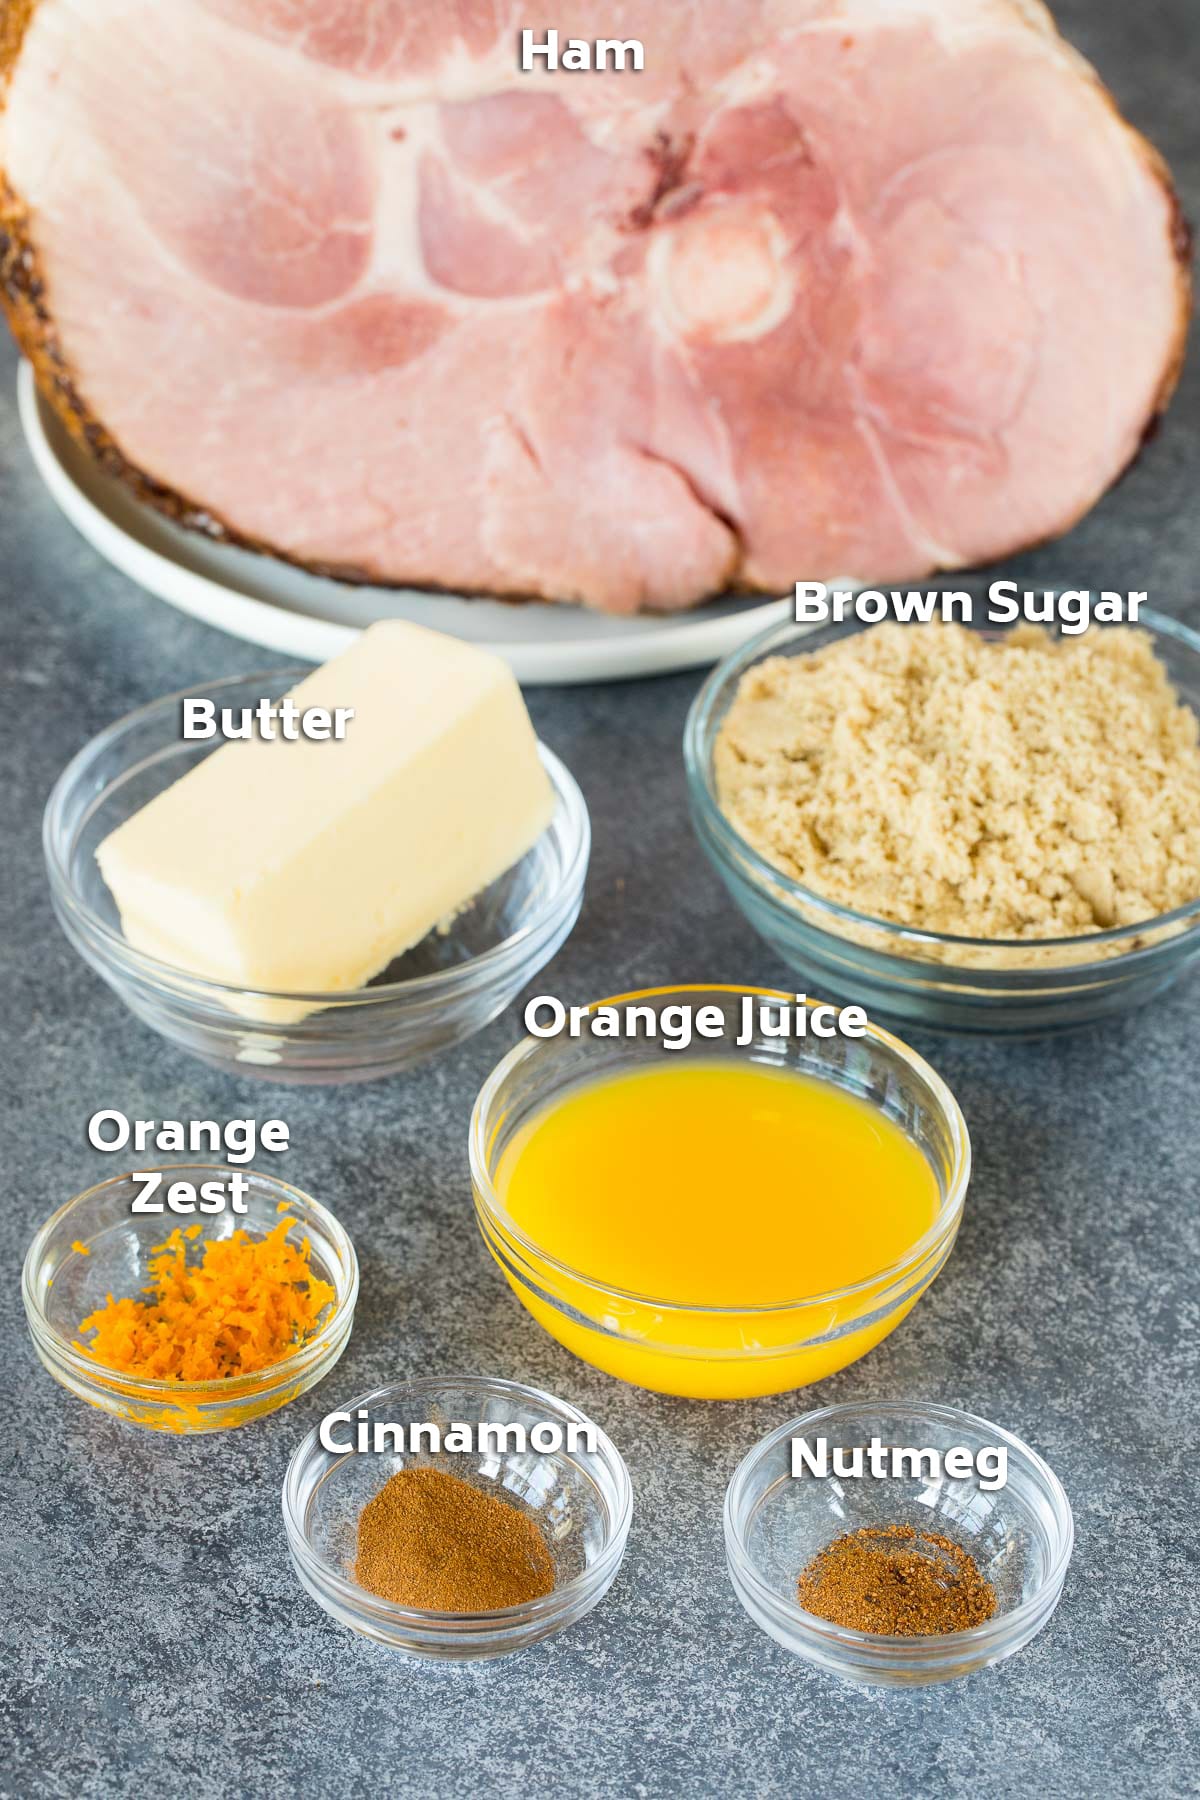 Ingredients including ham, orange juice, spices, brown sugar and butter.